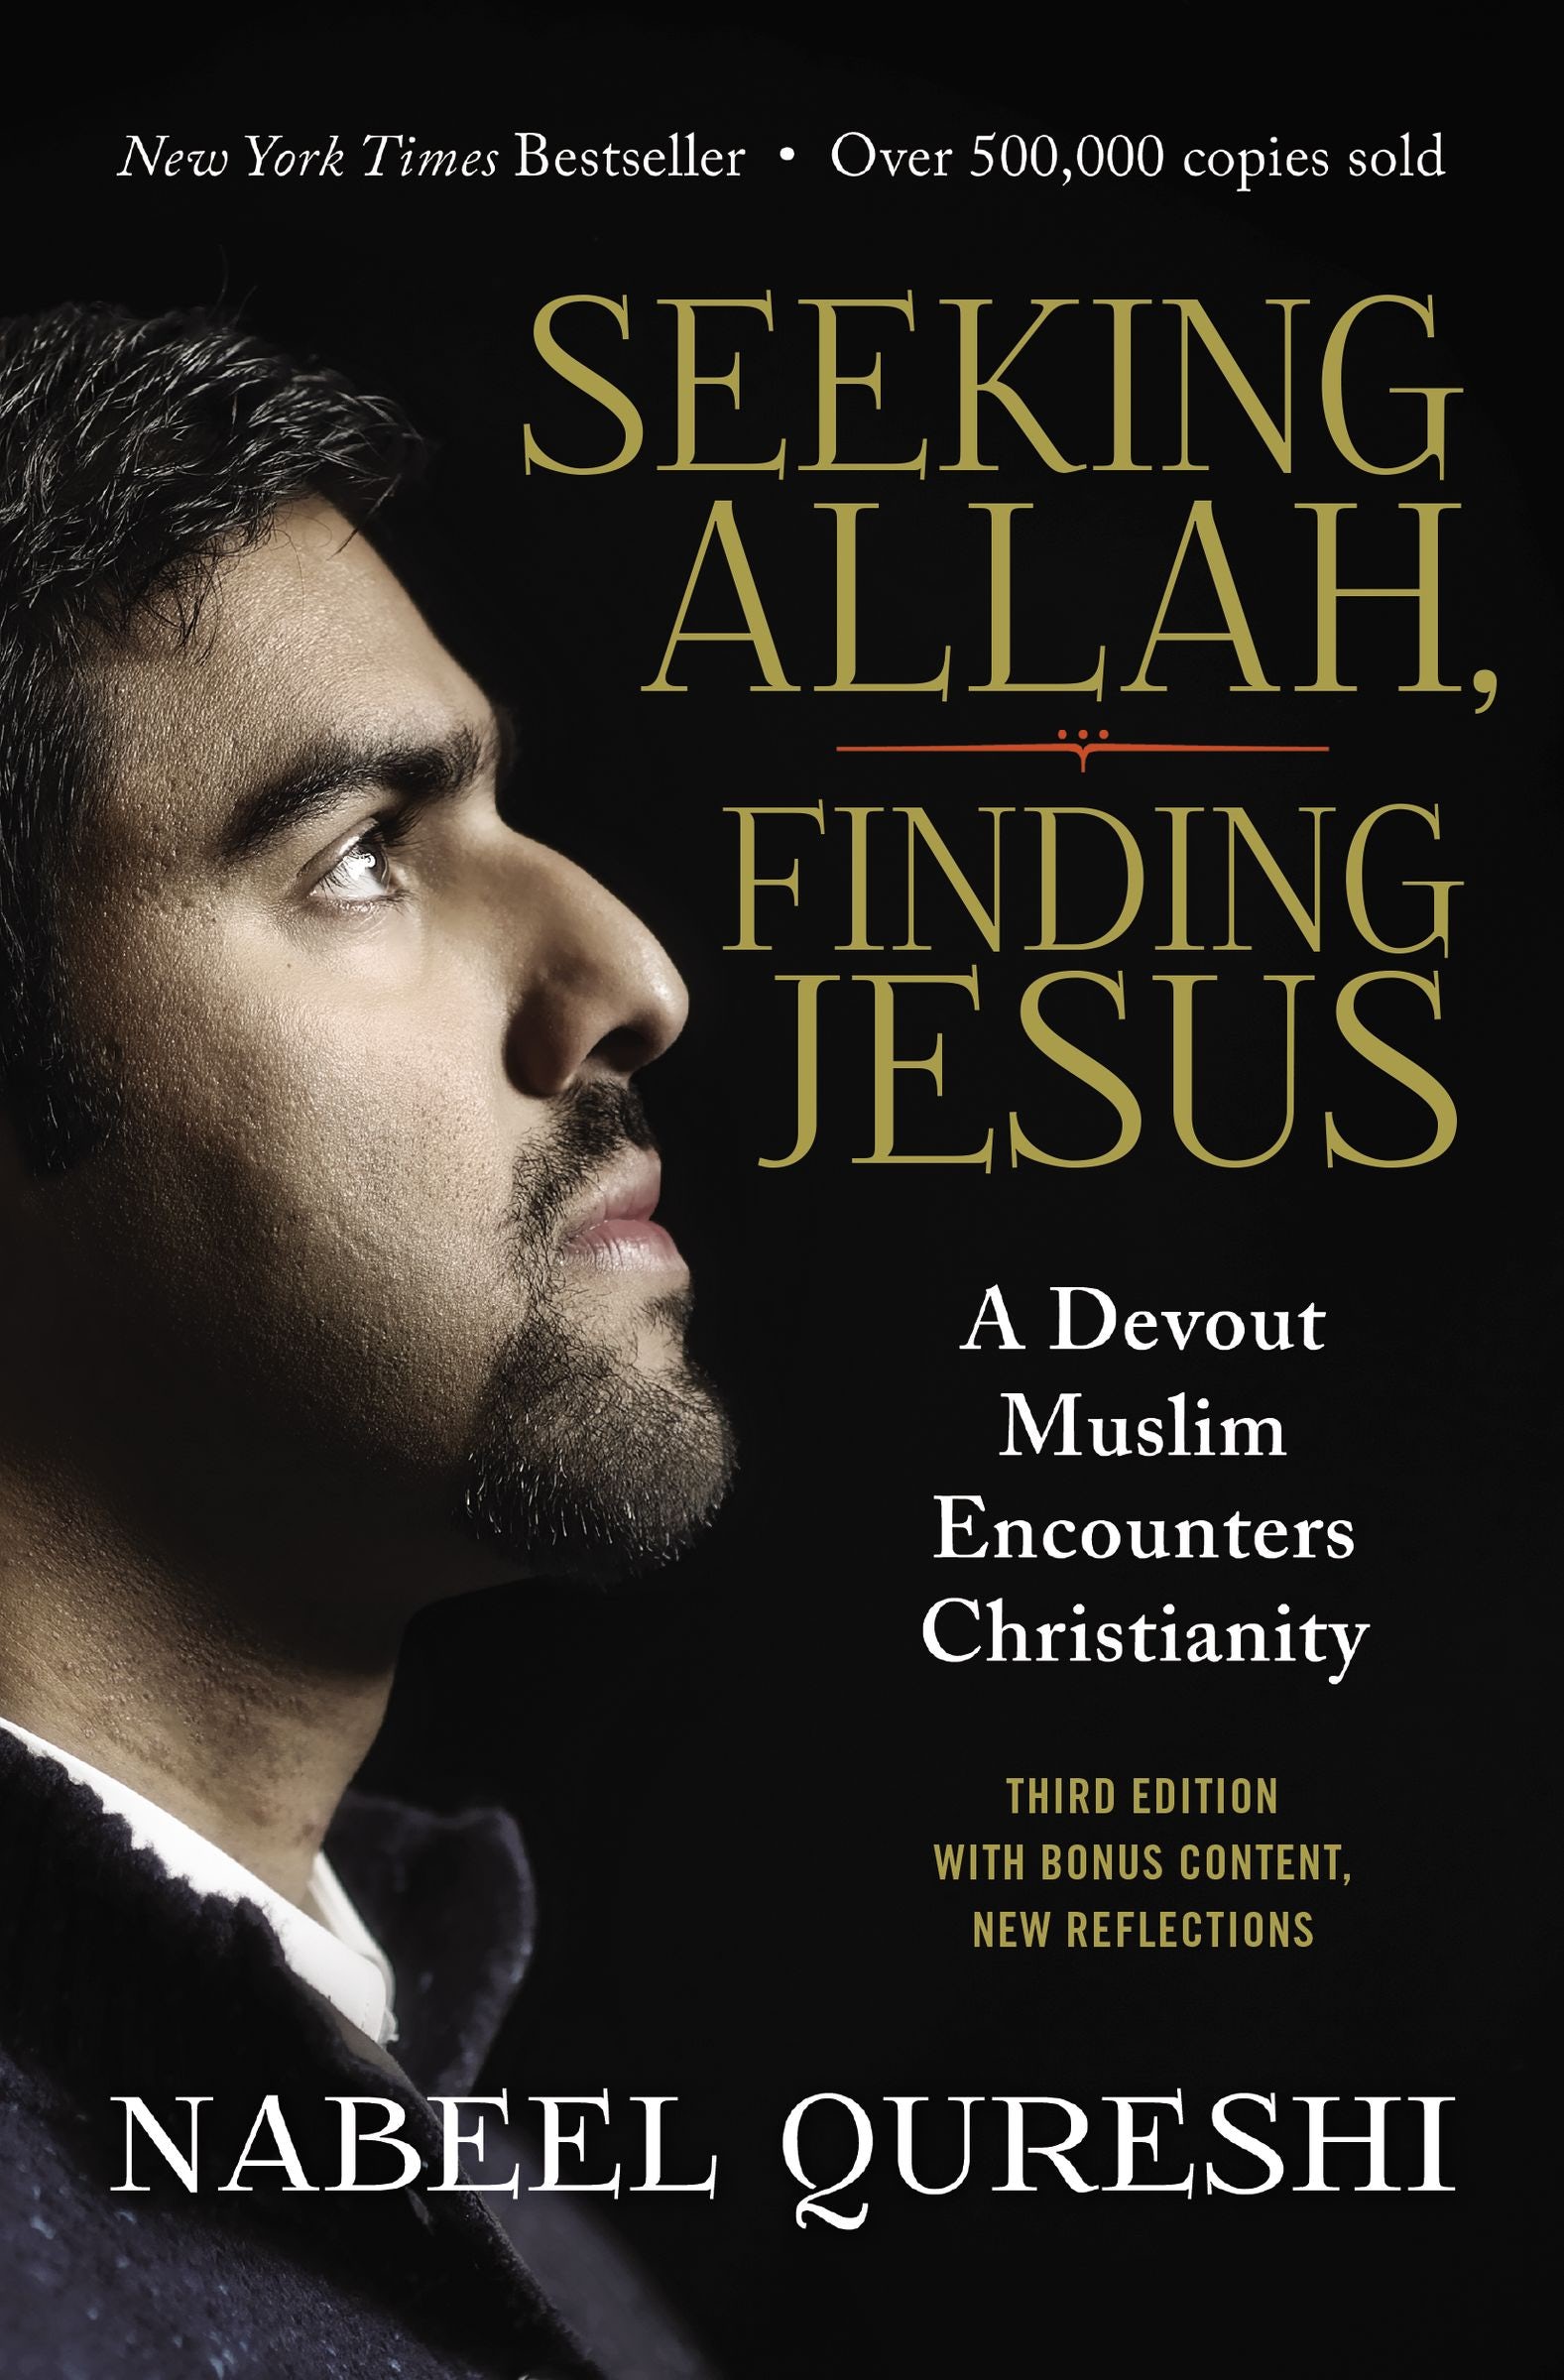 Seeking Allah, Finding Jesus - A Devout Muslim Encounters Christianity [3rd Edition]